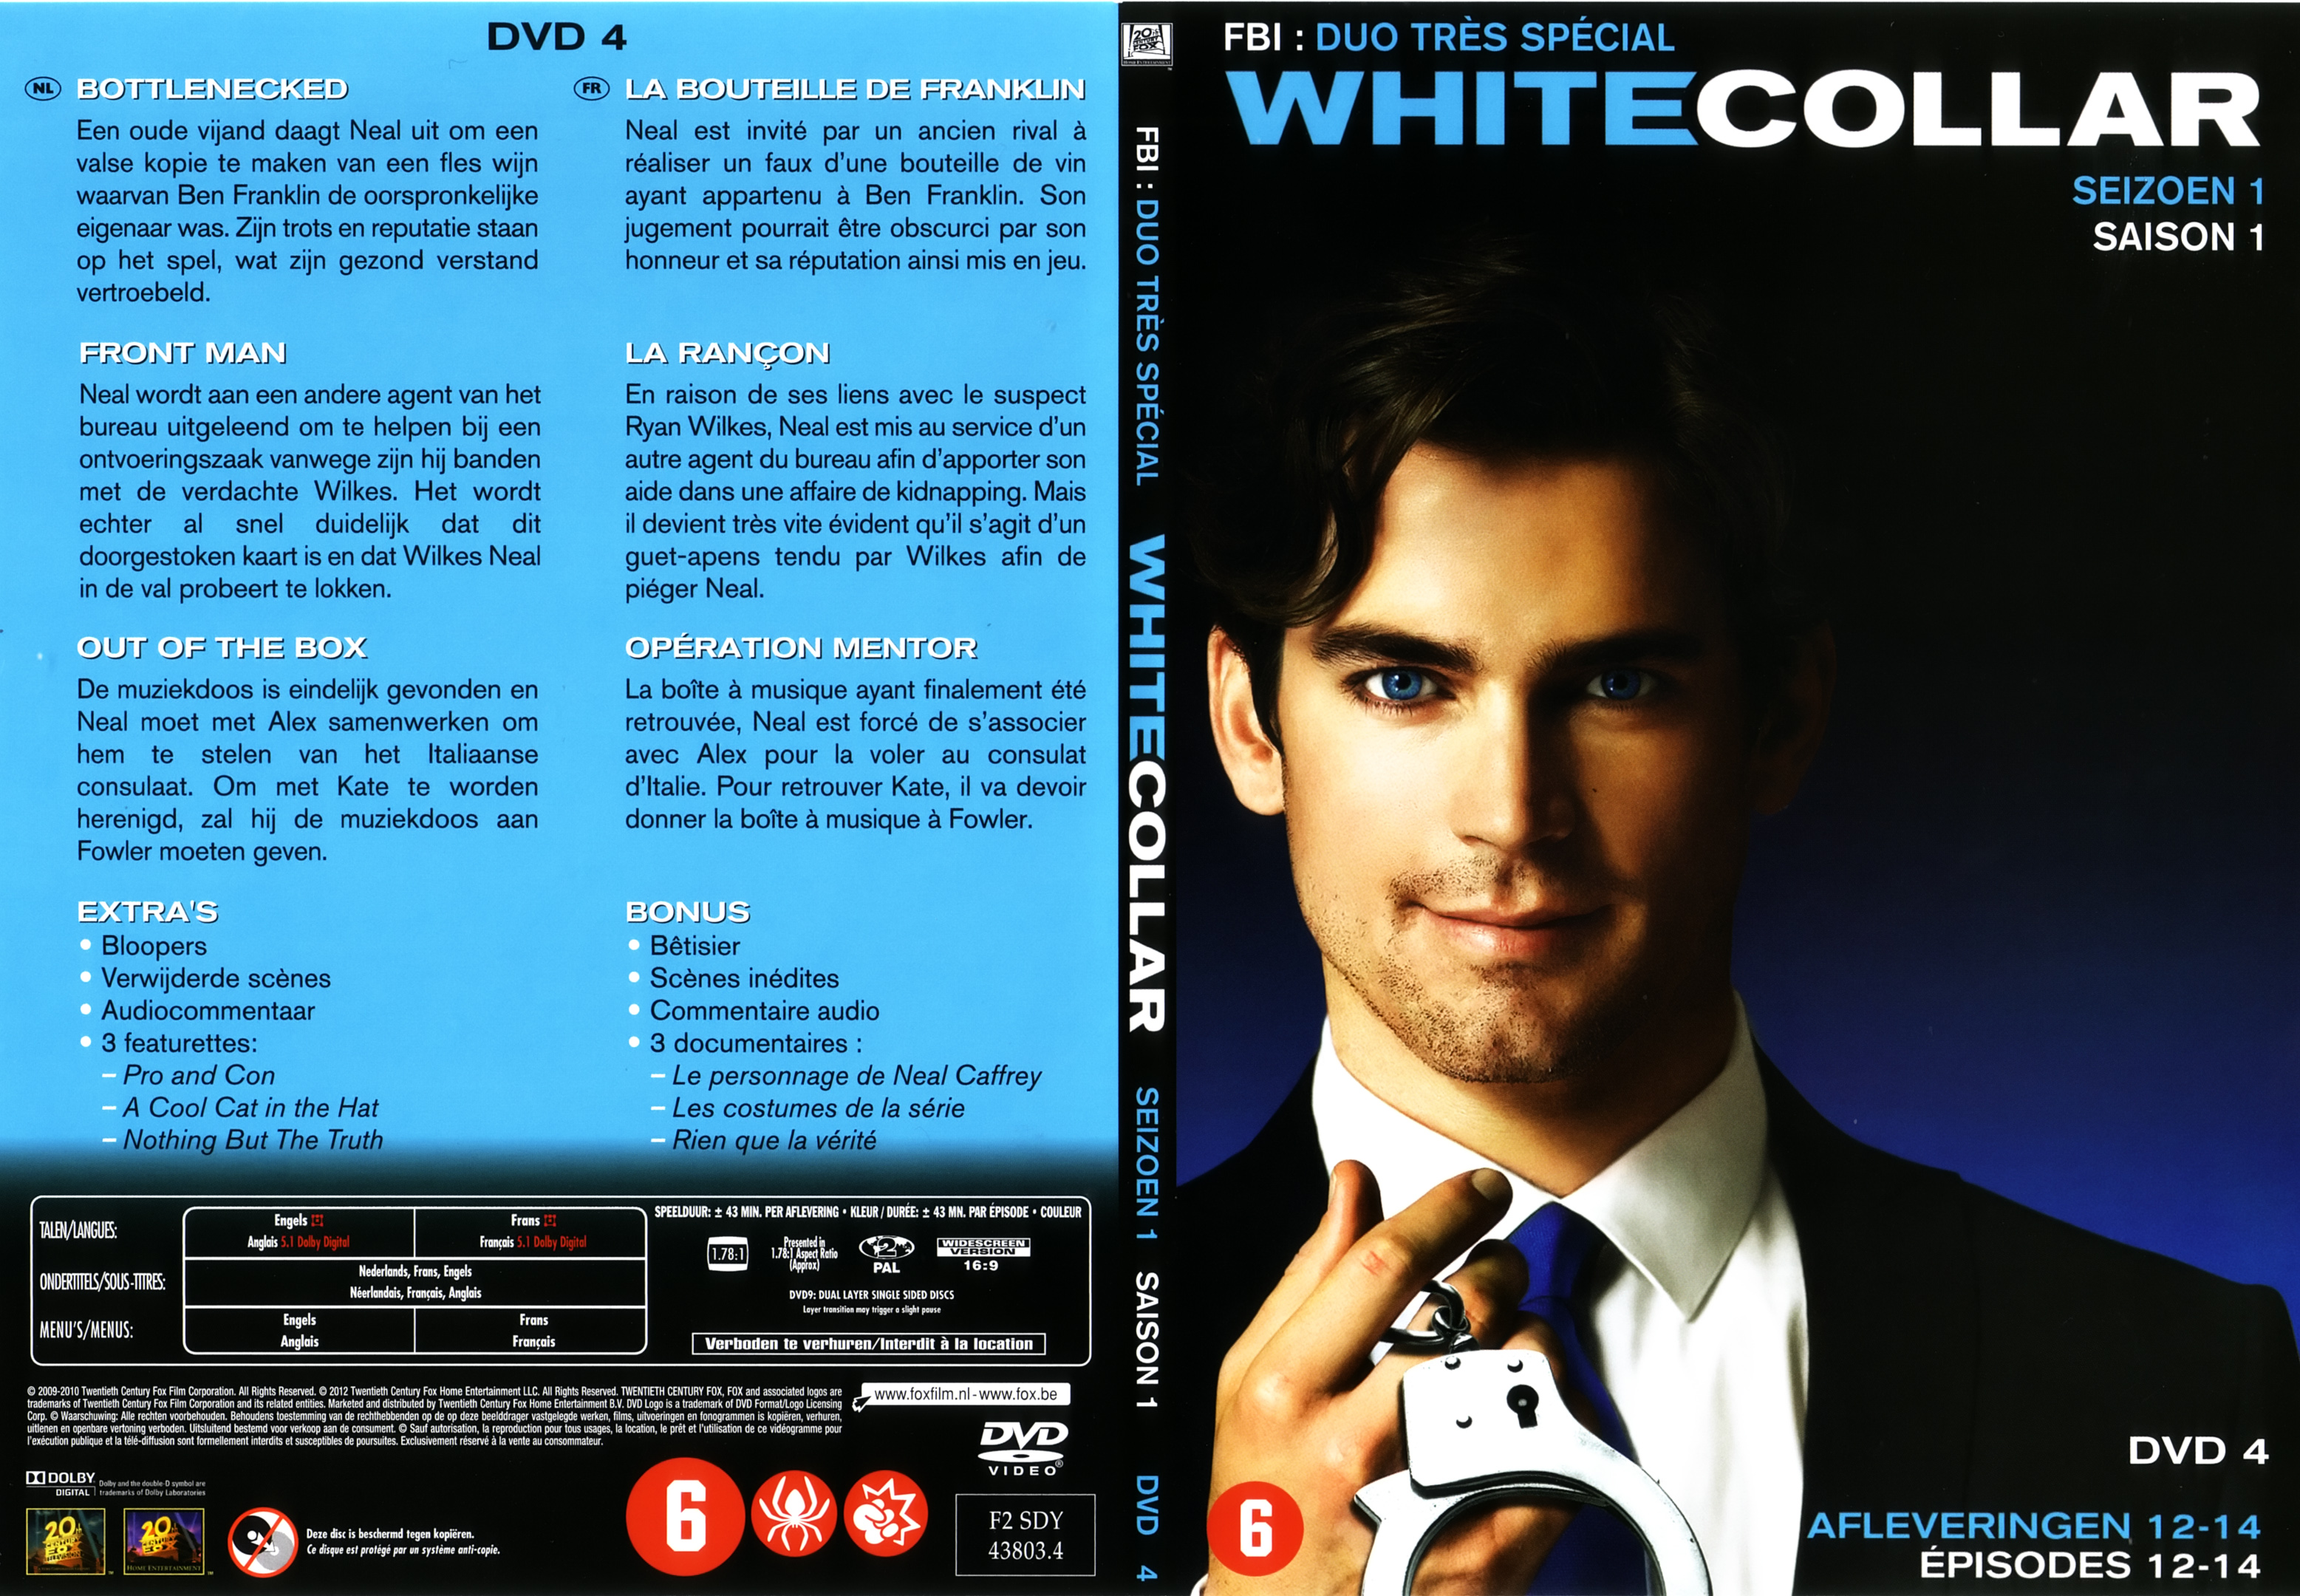 Jaquette DVD White collar saison 1 DVD 4